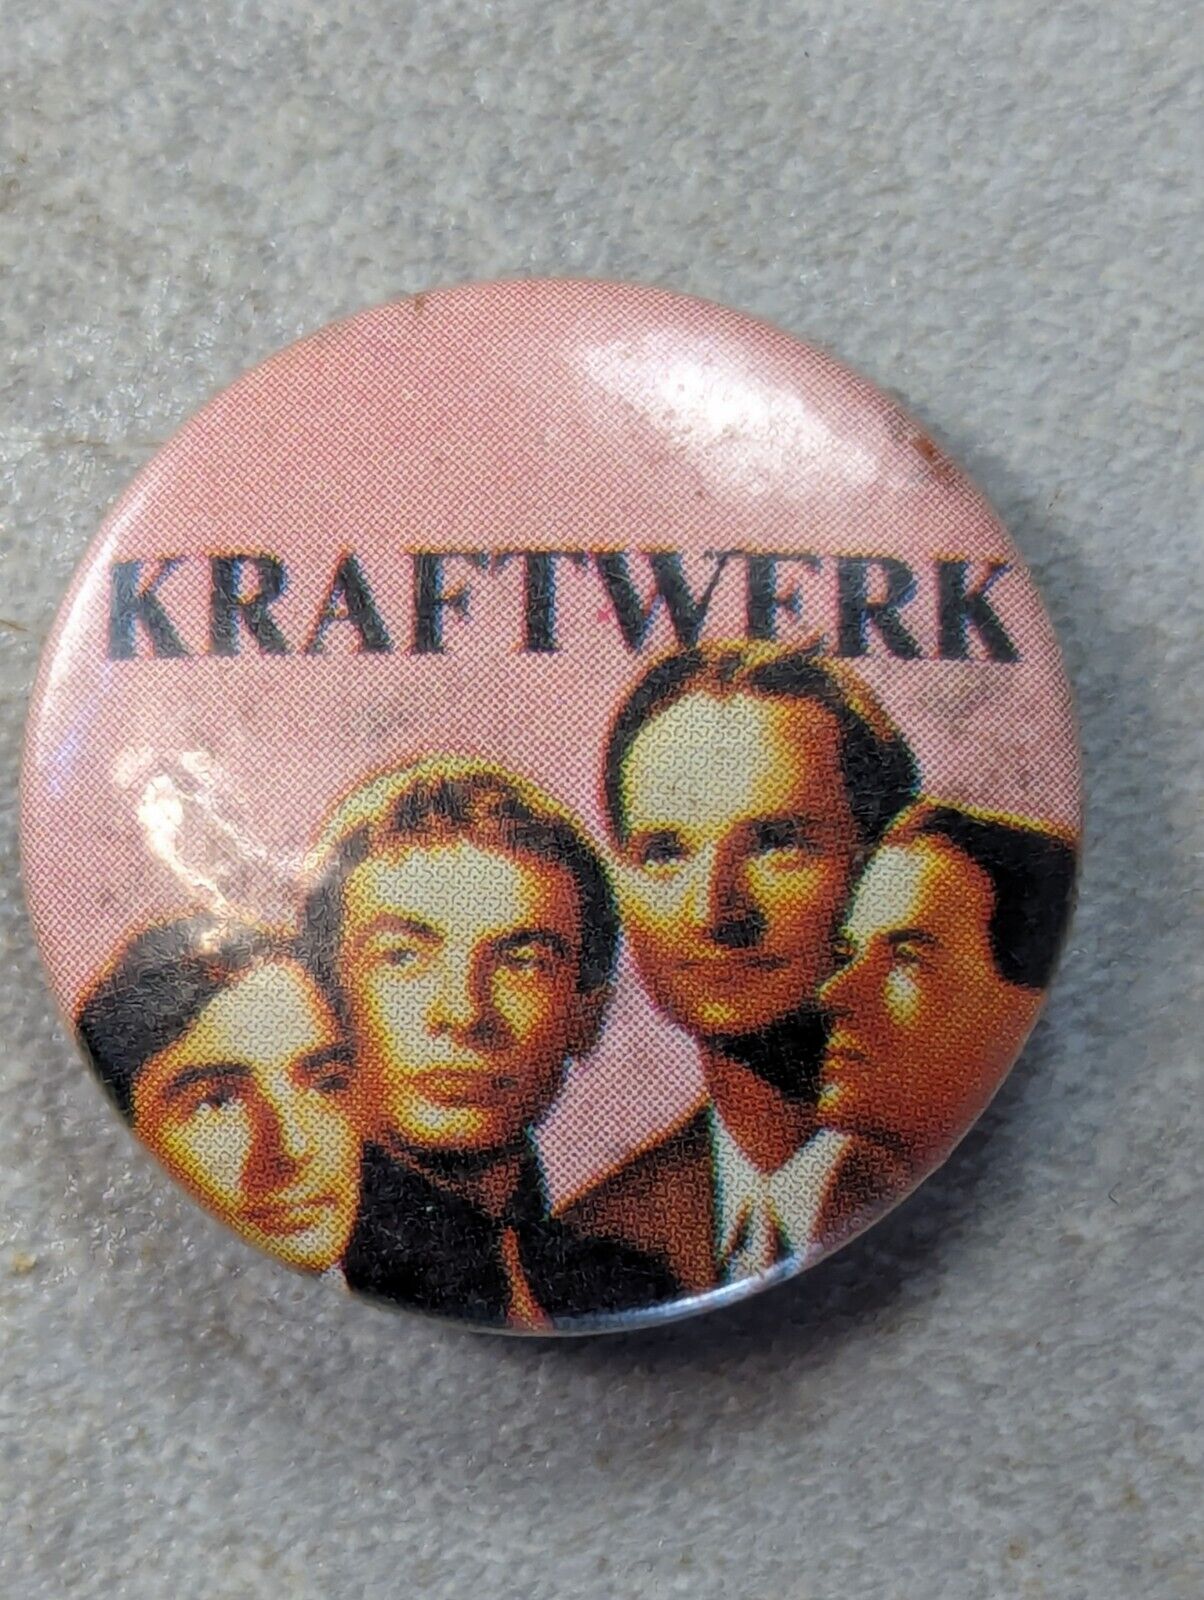 Vintage 80s Kraftwerk PIN BADGE Purchased Around 1986 